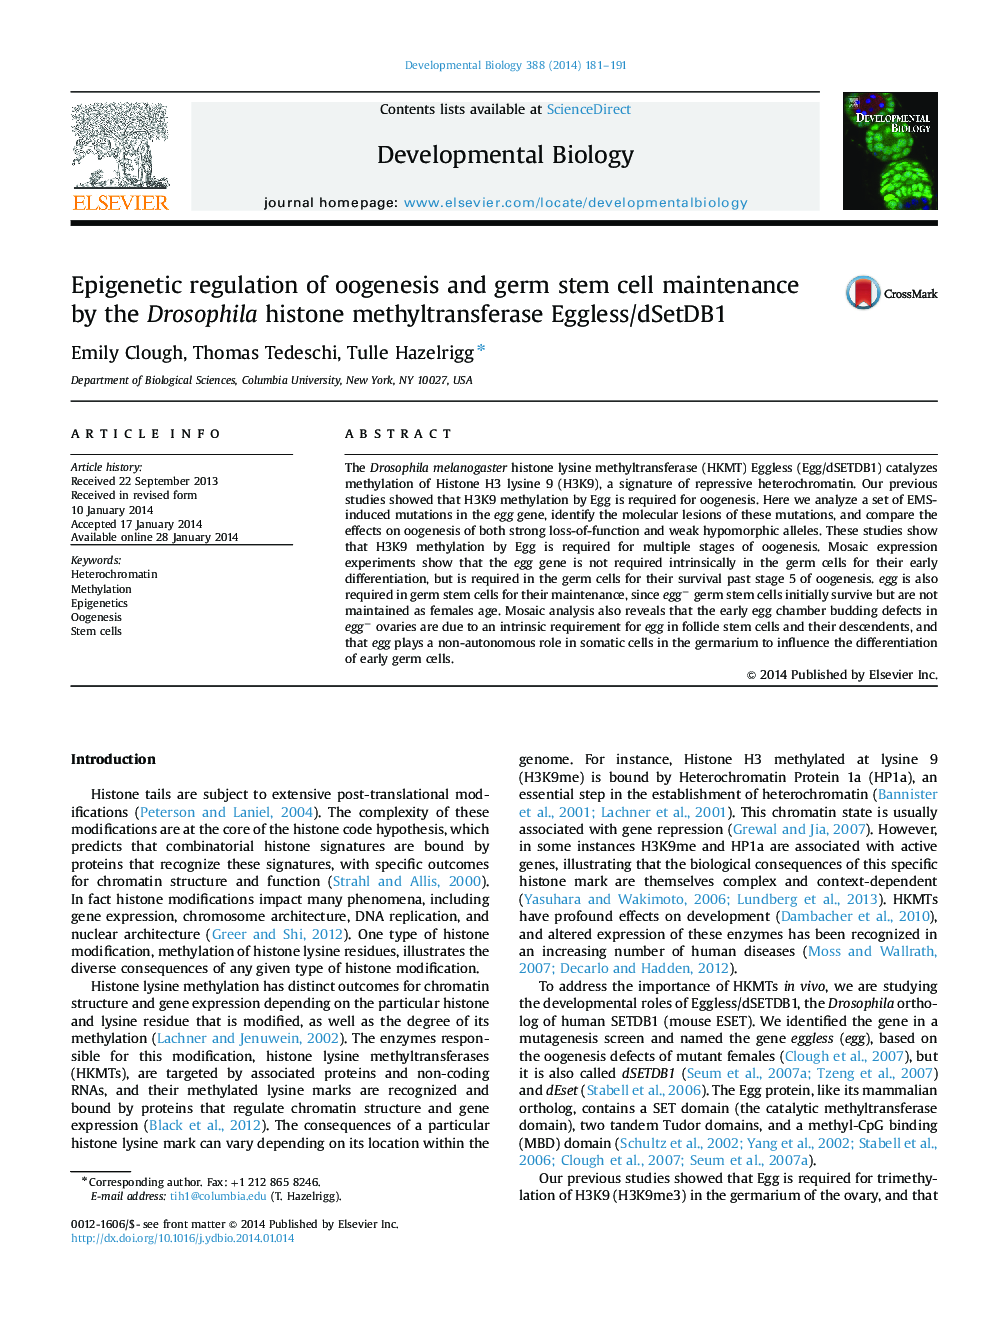 Epigenetic regulation of oogenesis and germ stem cell maintenance by the Drosophila histone methyltransferase Eggless/dSetDB1